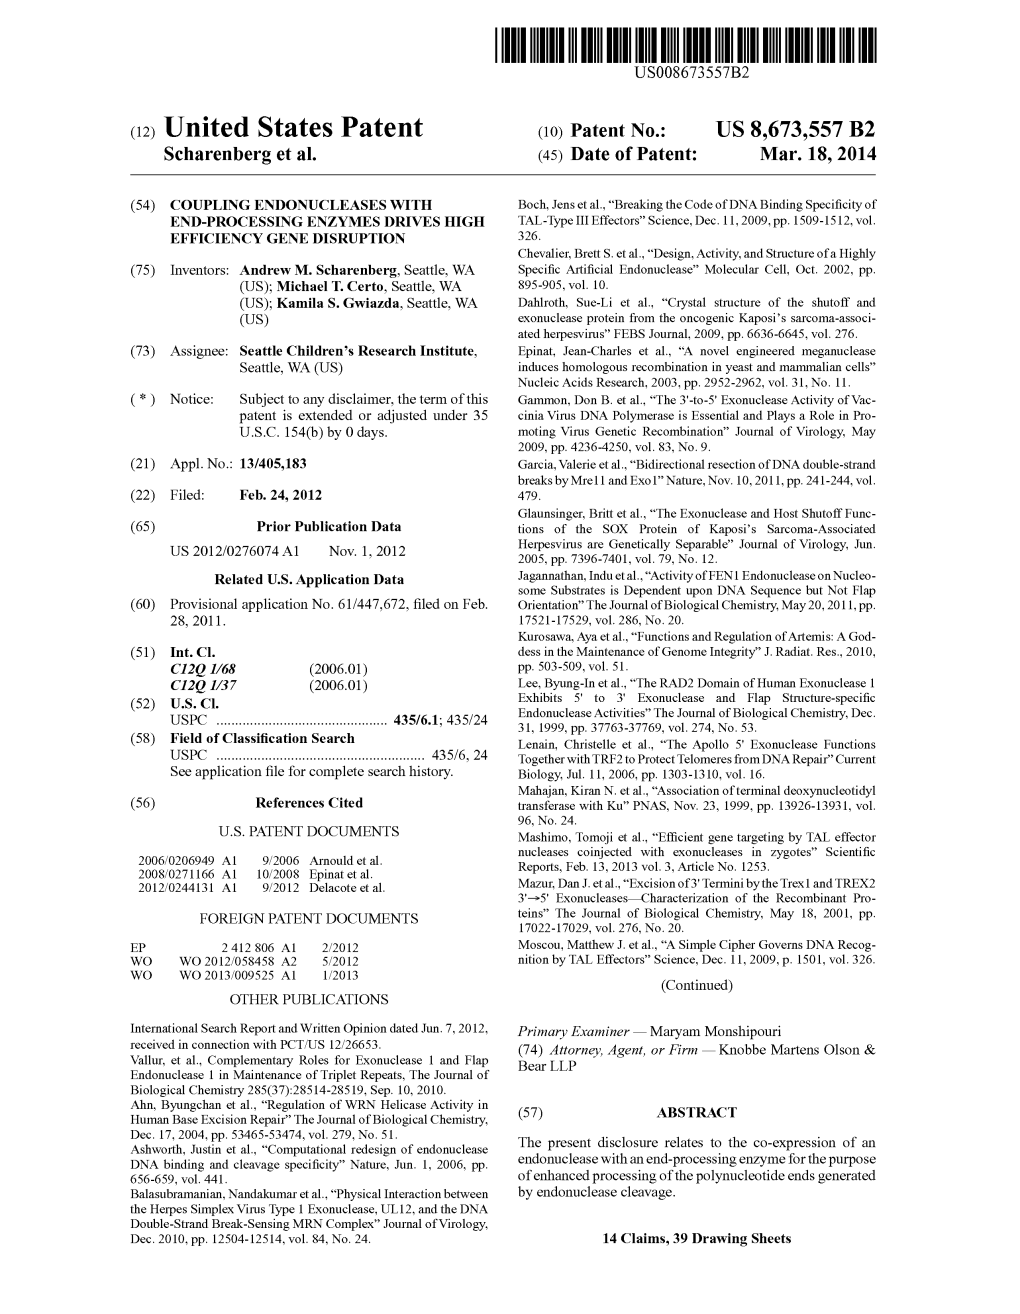 (12) United States Patent (10) Patent No.: US 8,673,557 B2 Scharenberg Et Al